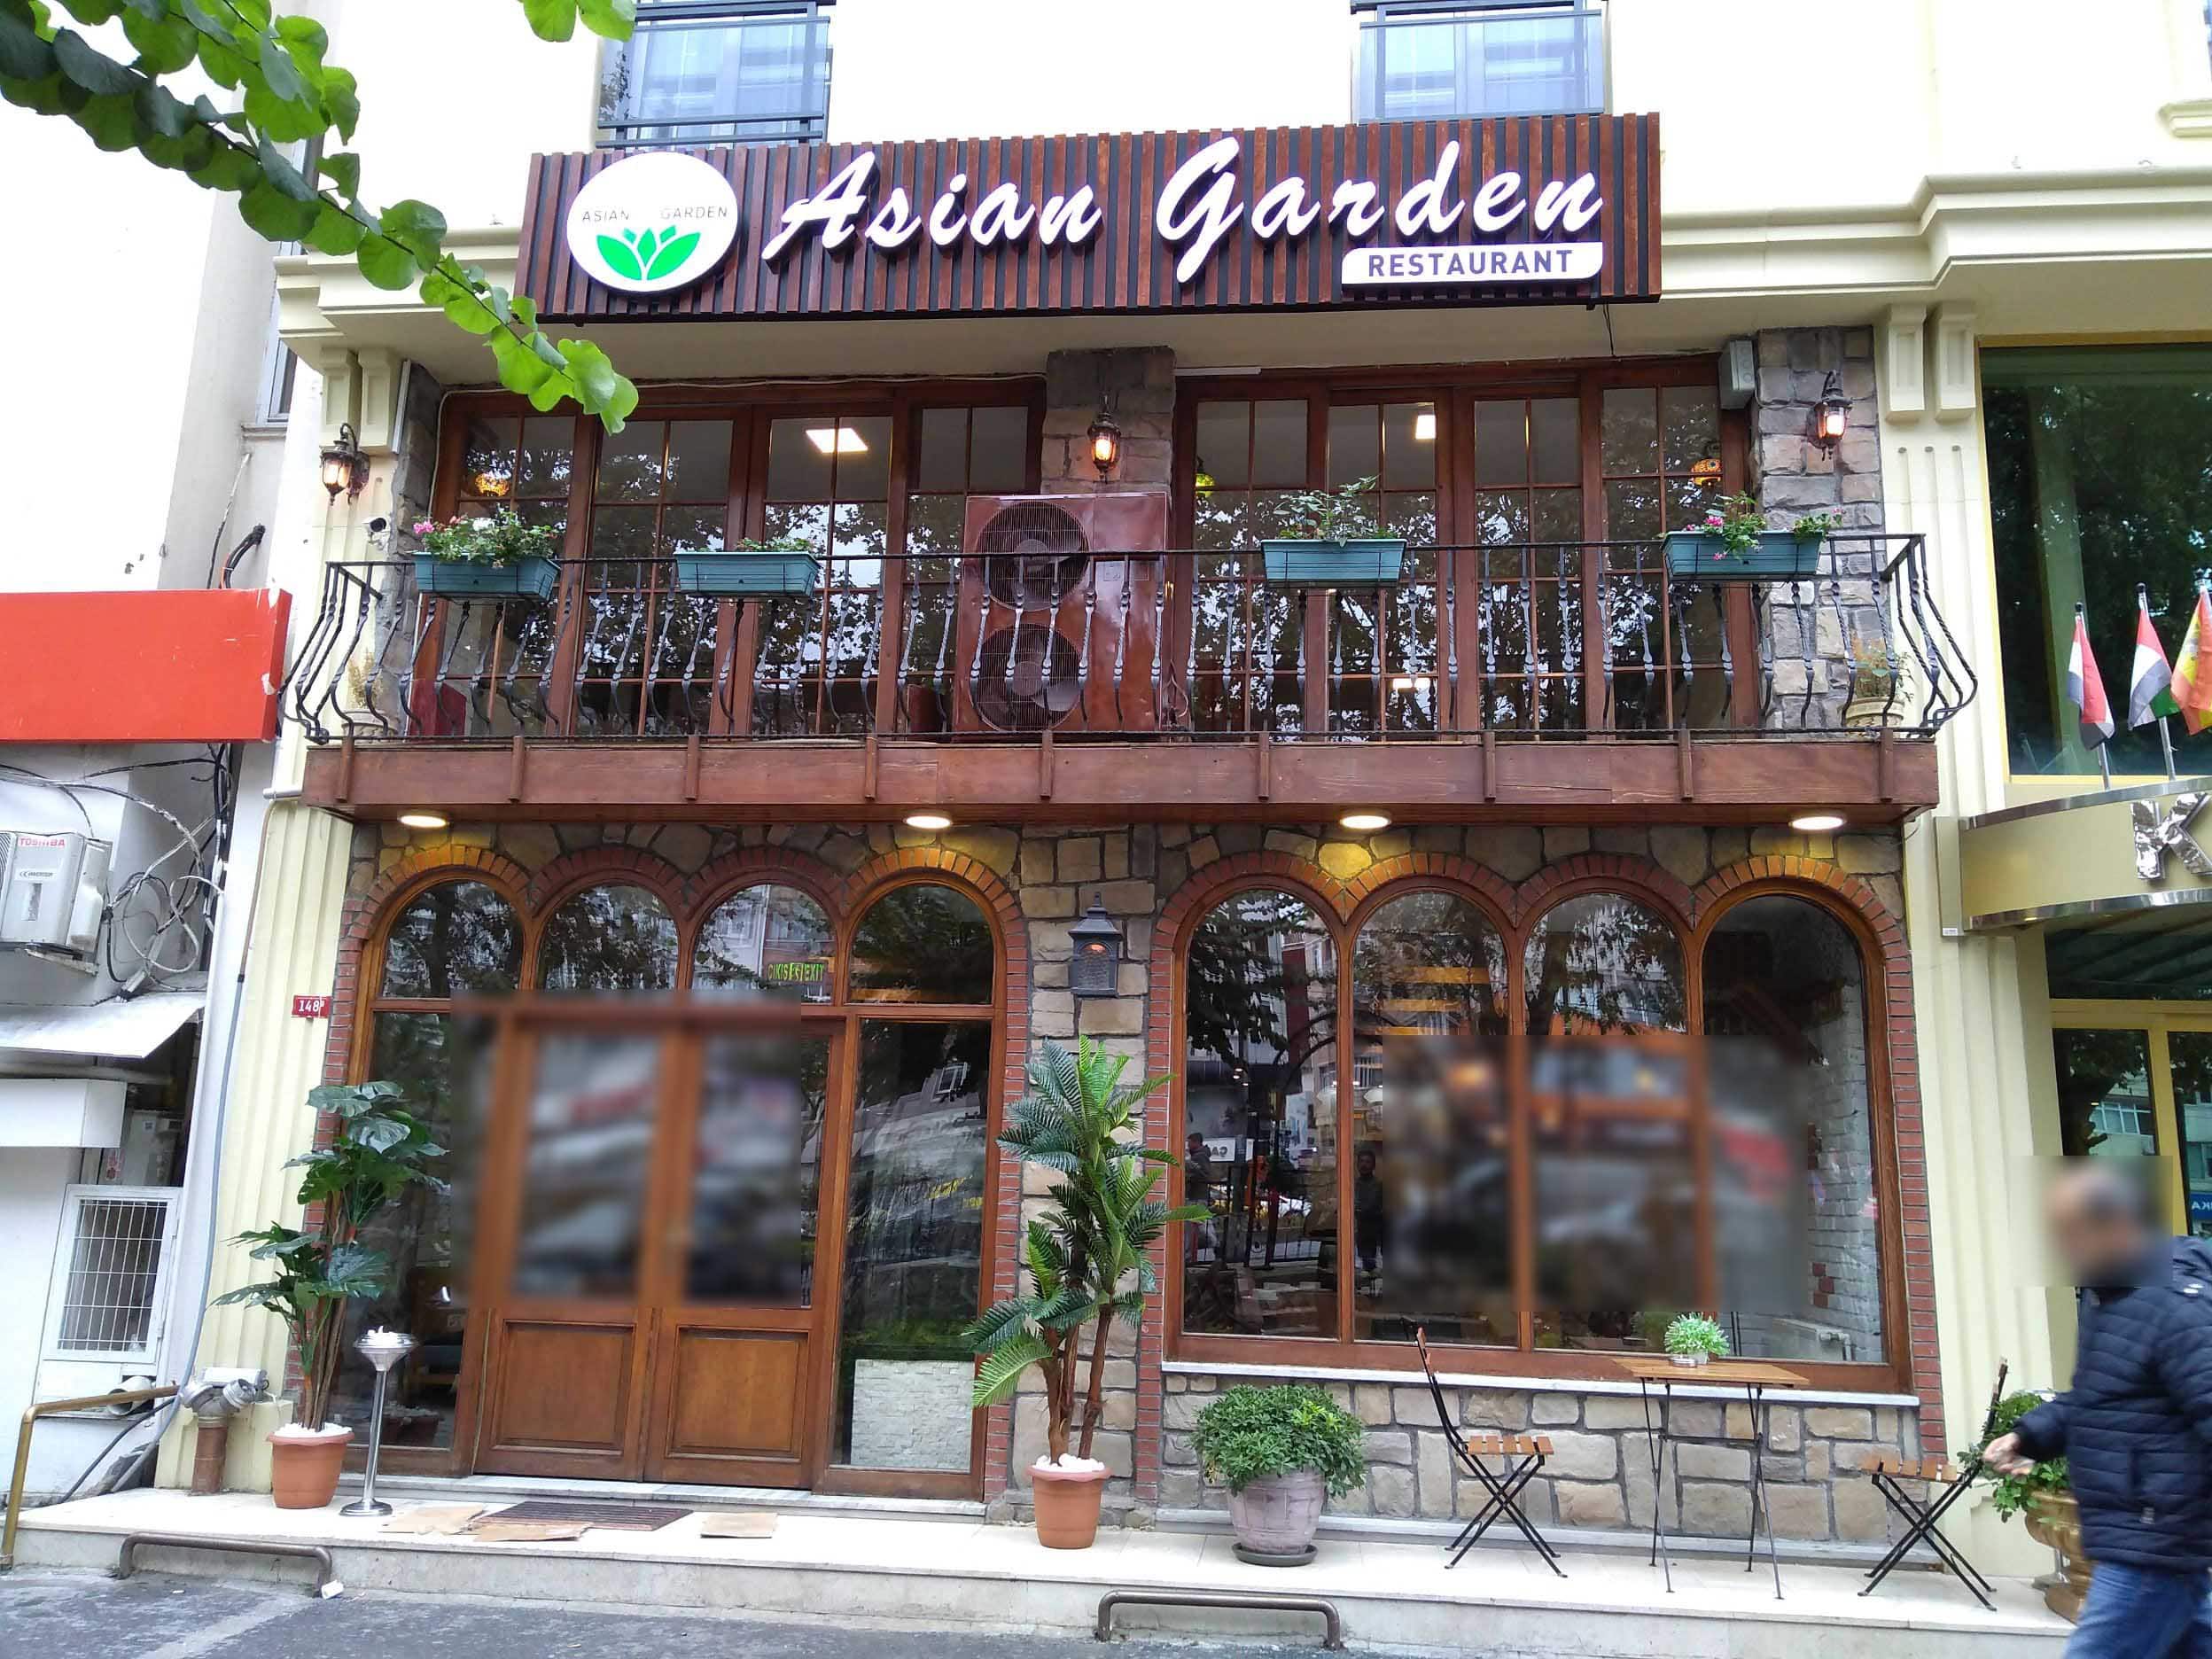 Asian Garden Restaurant Photos Pictures Of Asian Garden Restaurant Topkapi Istanbul